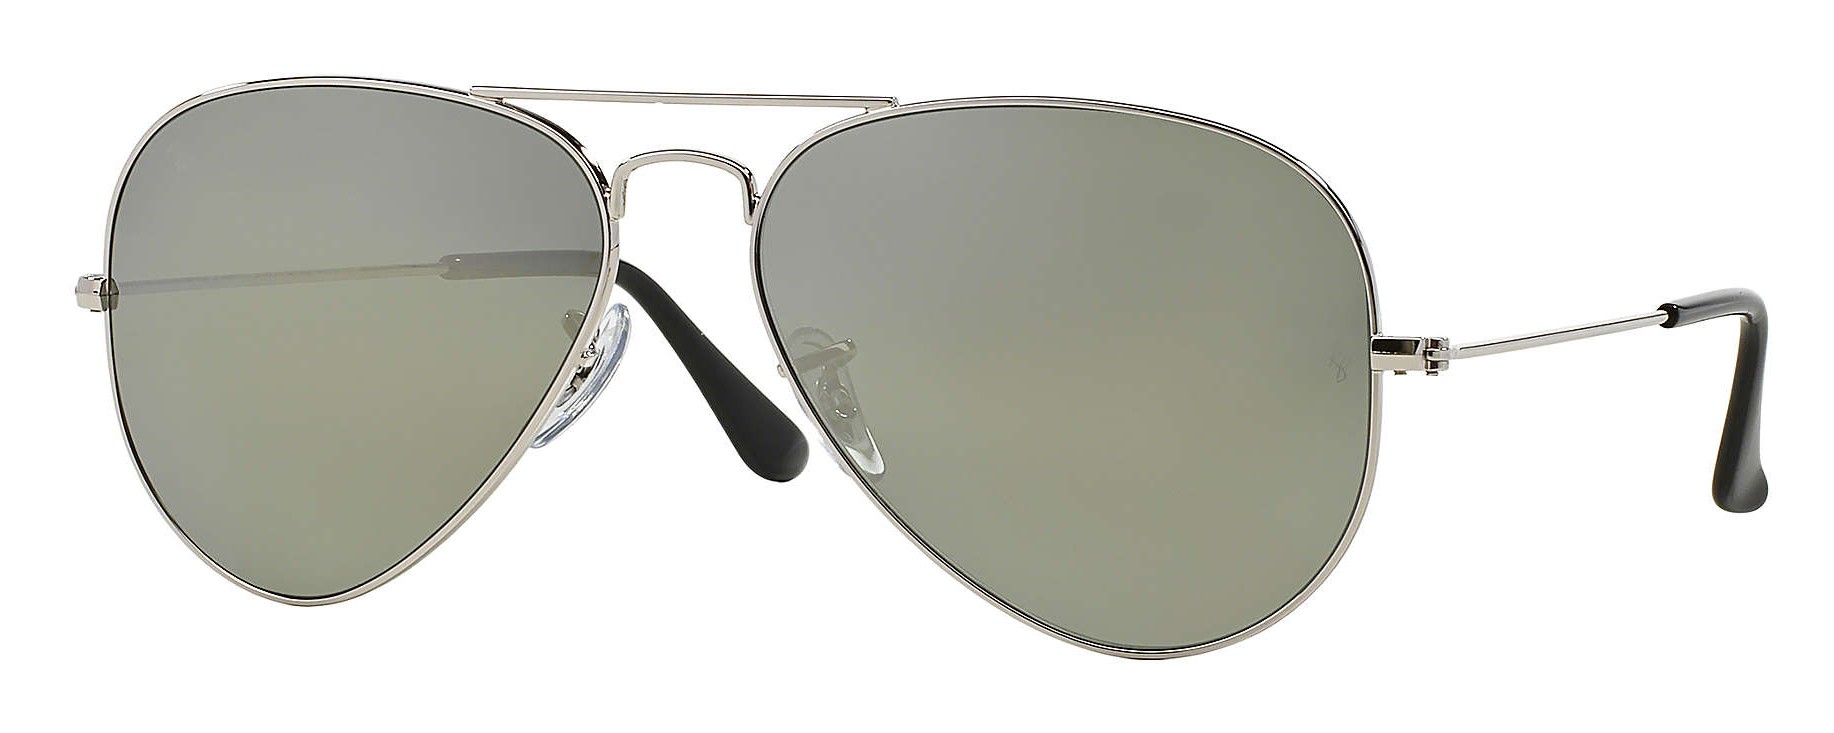 Ray-Ban - RB3025 003/59 - Original Aviator Classic - Silver - Polarized  Grey Mirror Lenses - Sunglass - Ray-Ban Eyewear - Avvenice